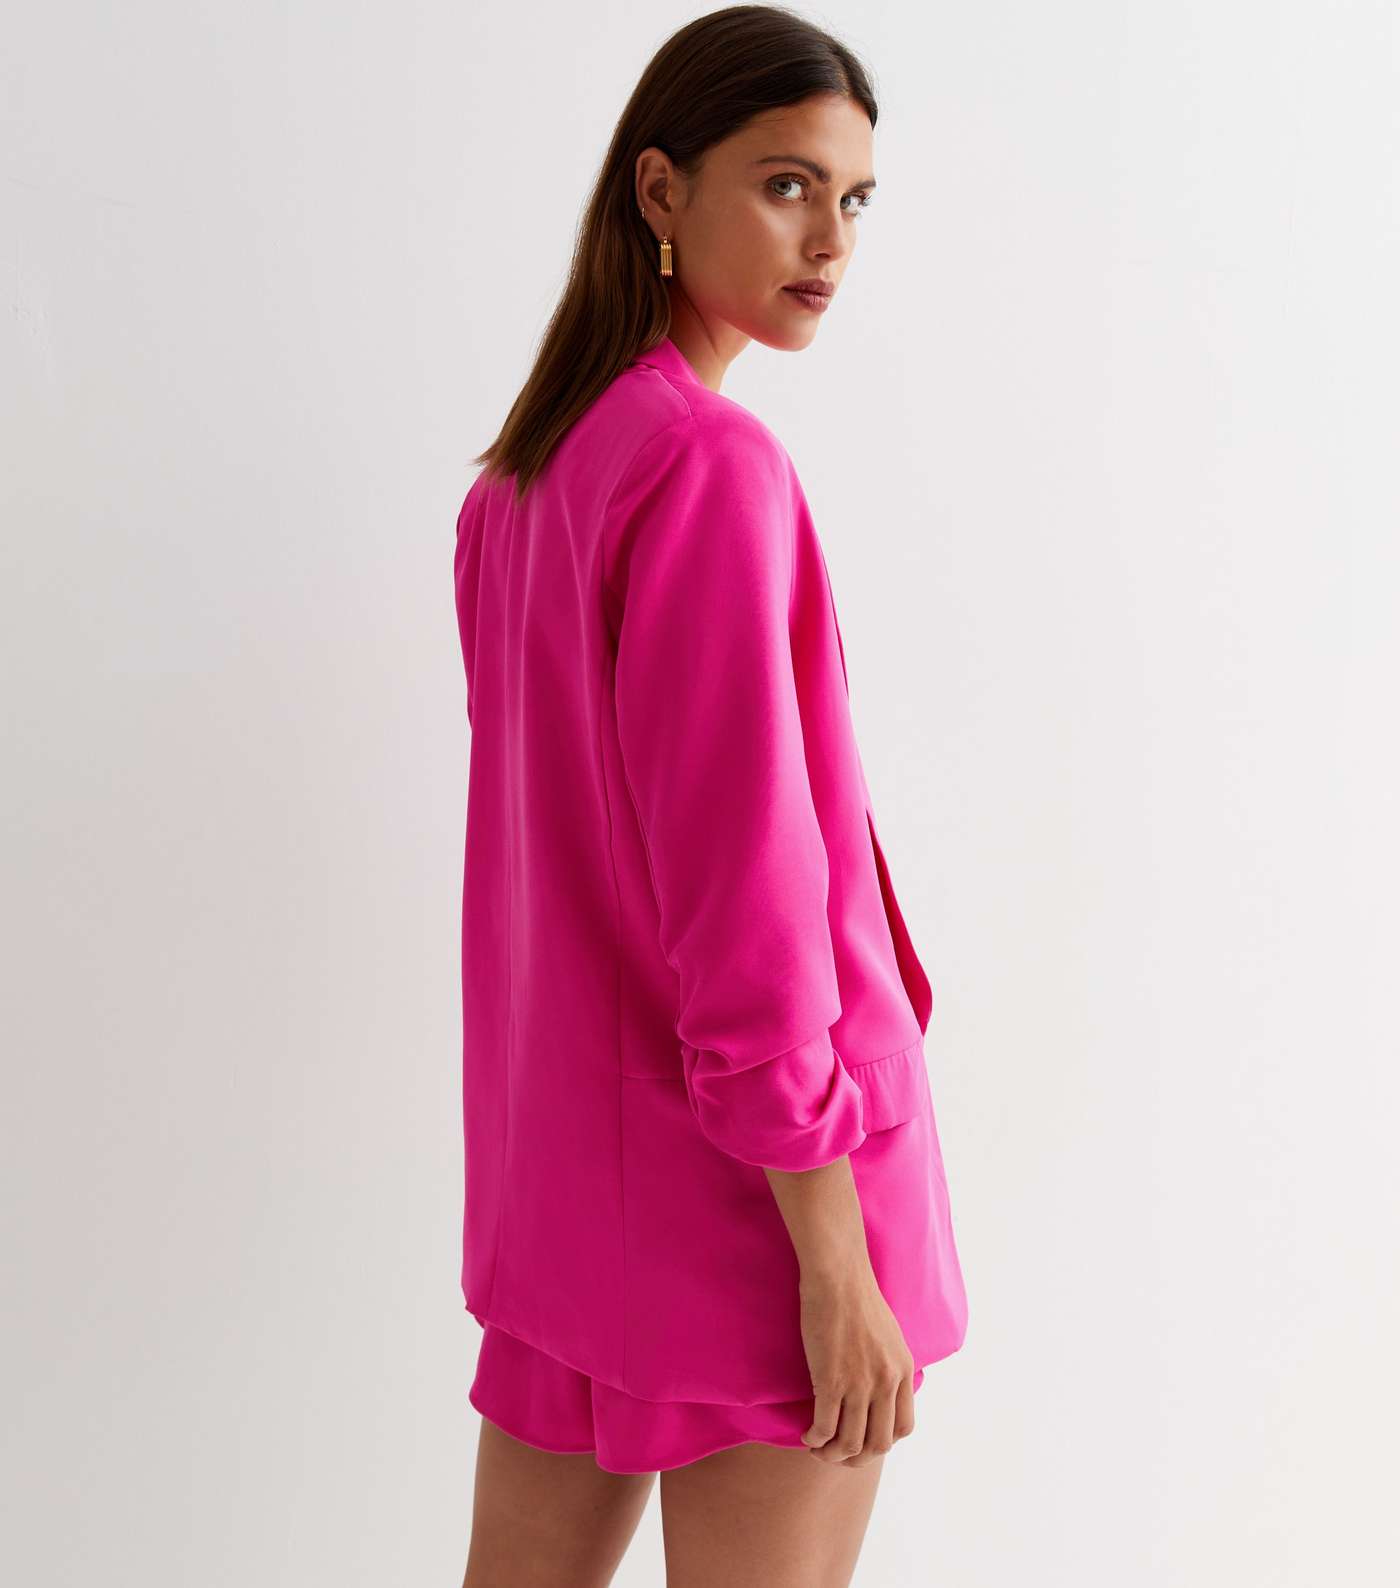 Cameo Rose Bright Pink 3/4 Sleeve Blazer Image 4